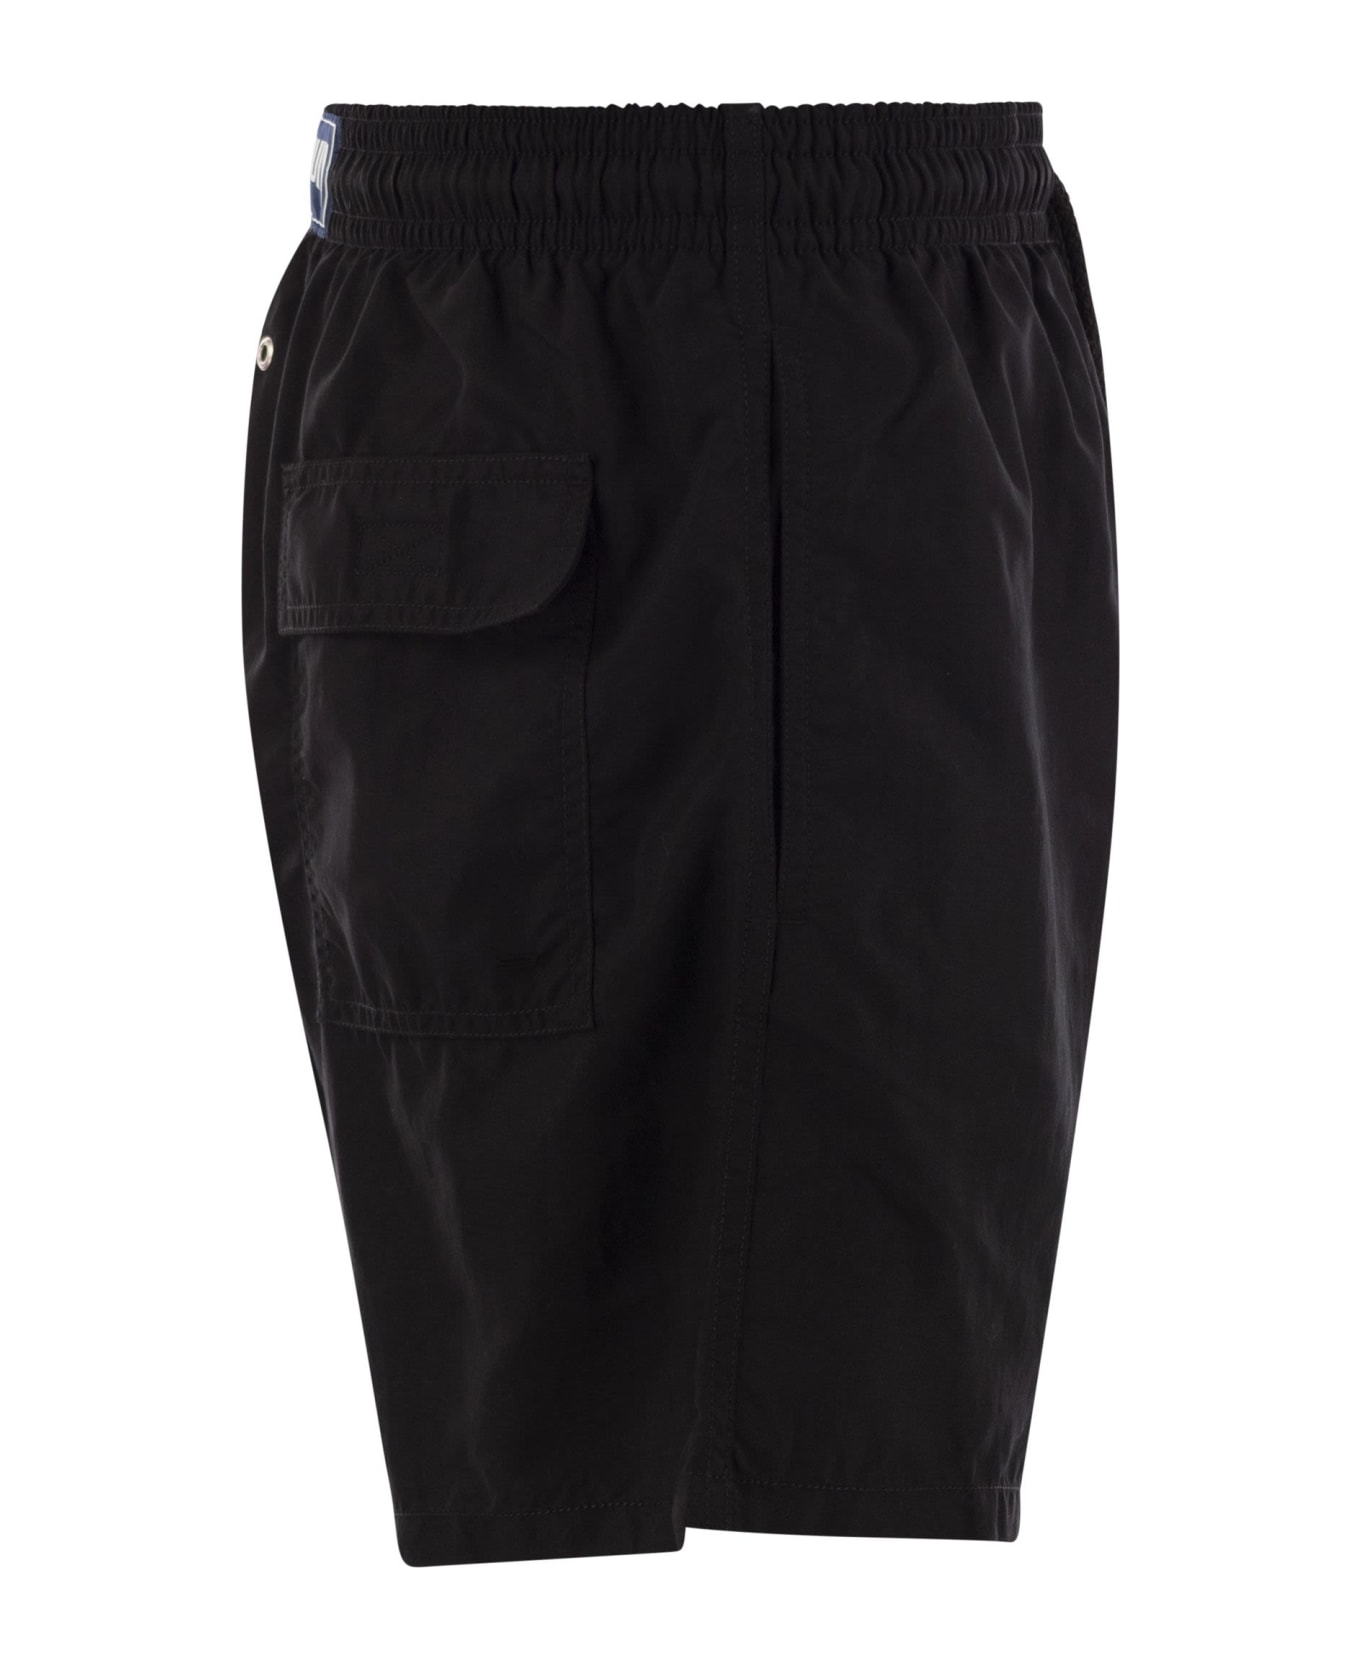 Vilebrequin Plain-coloured Beach Shorts - Black